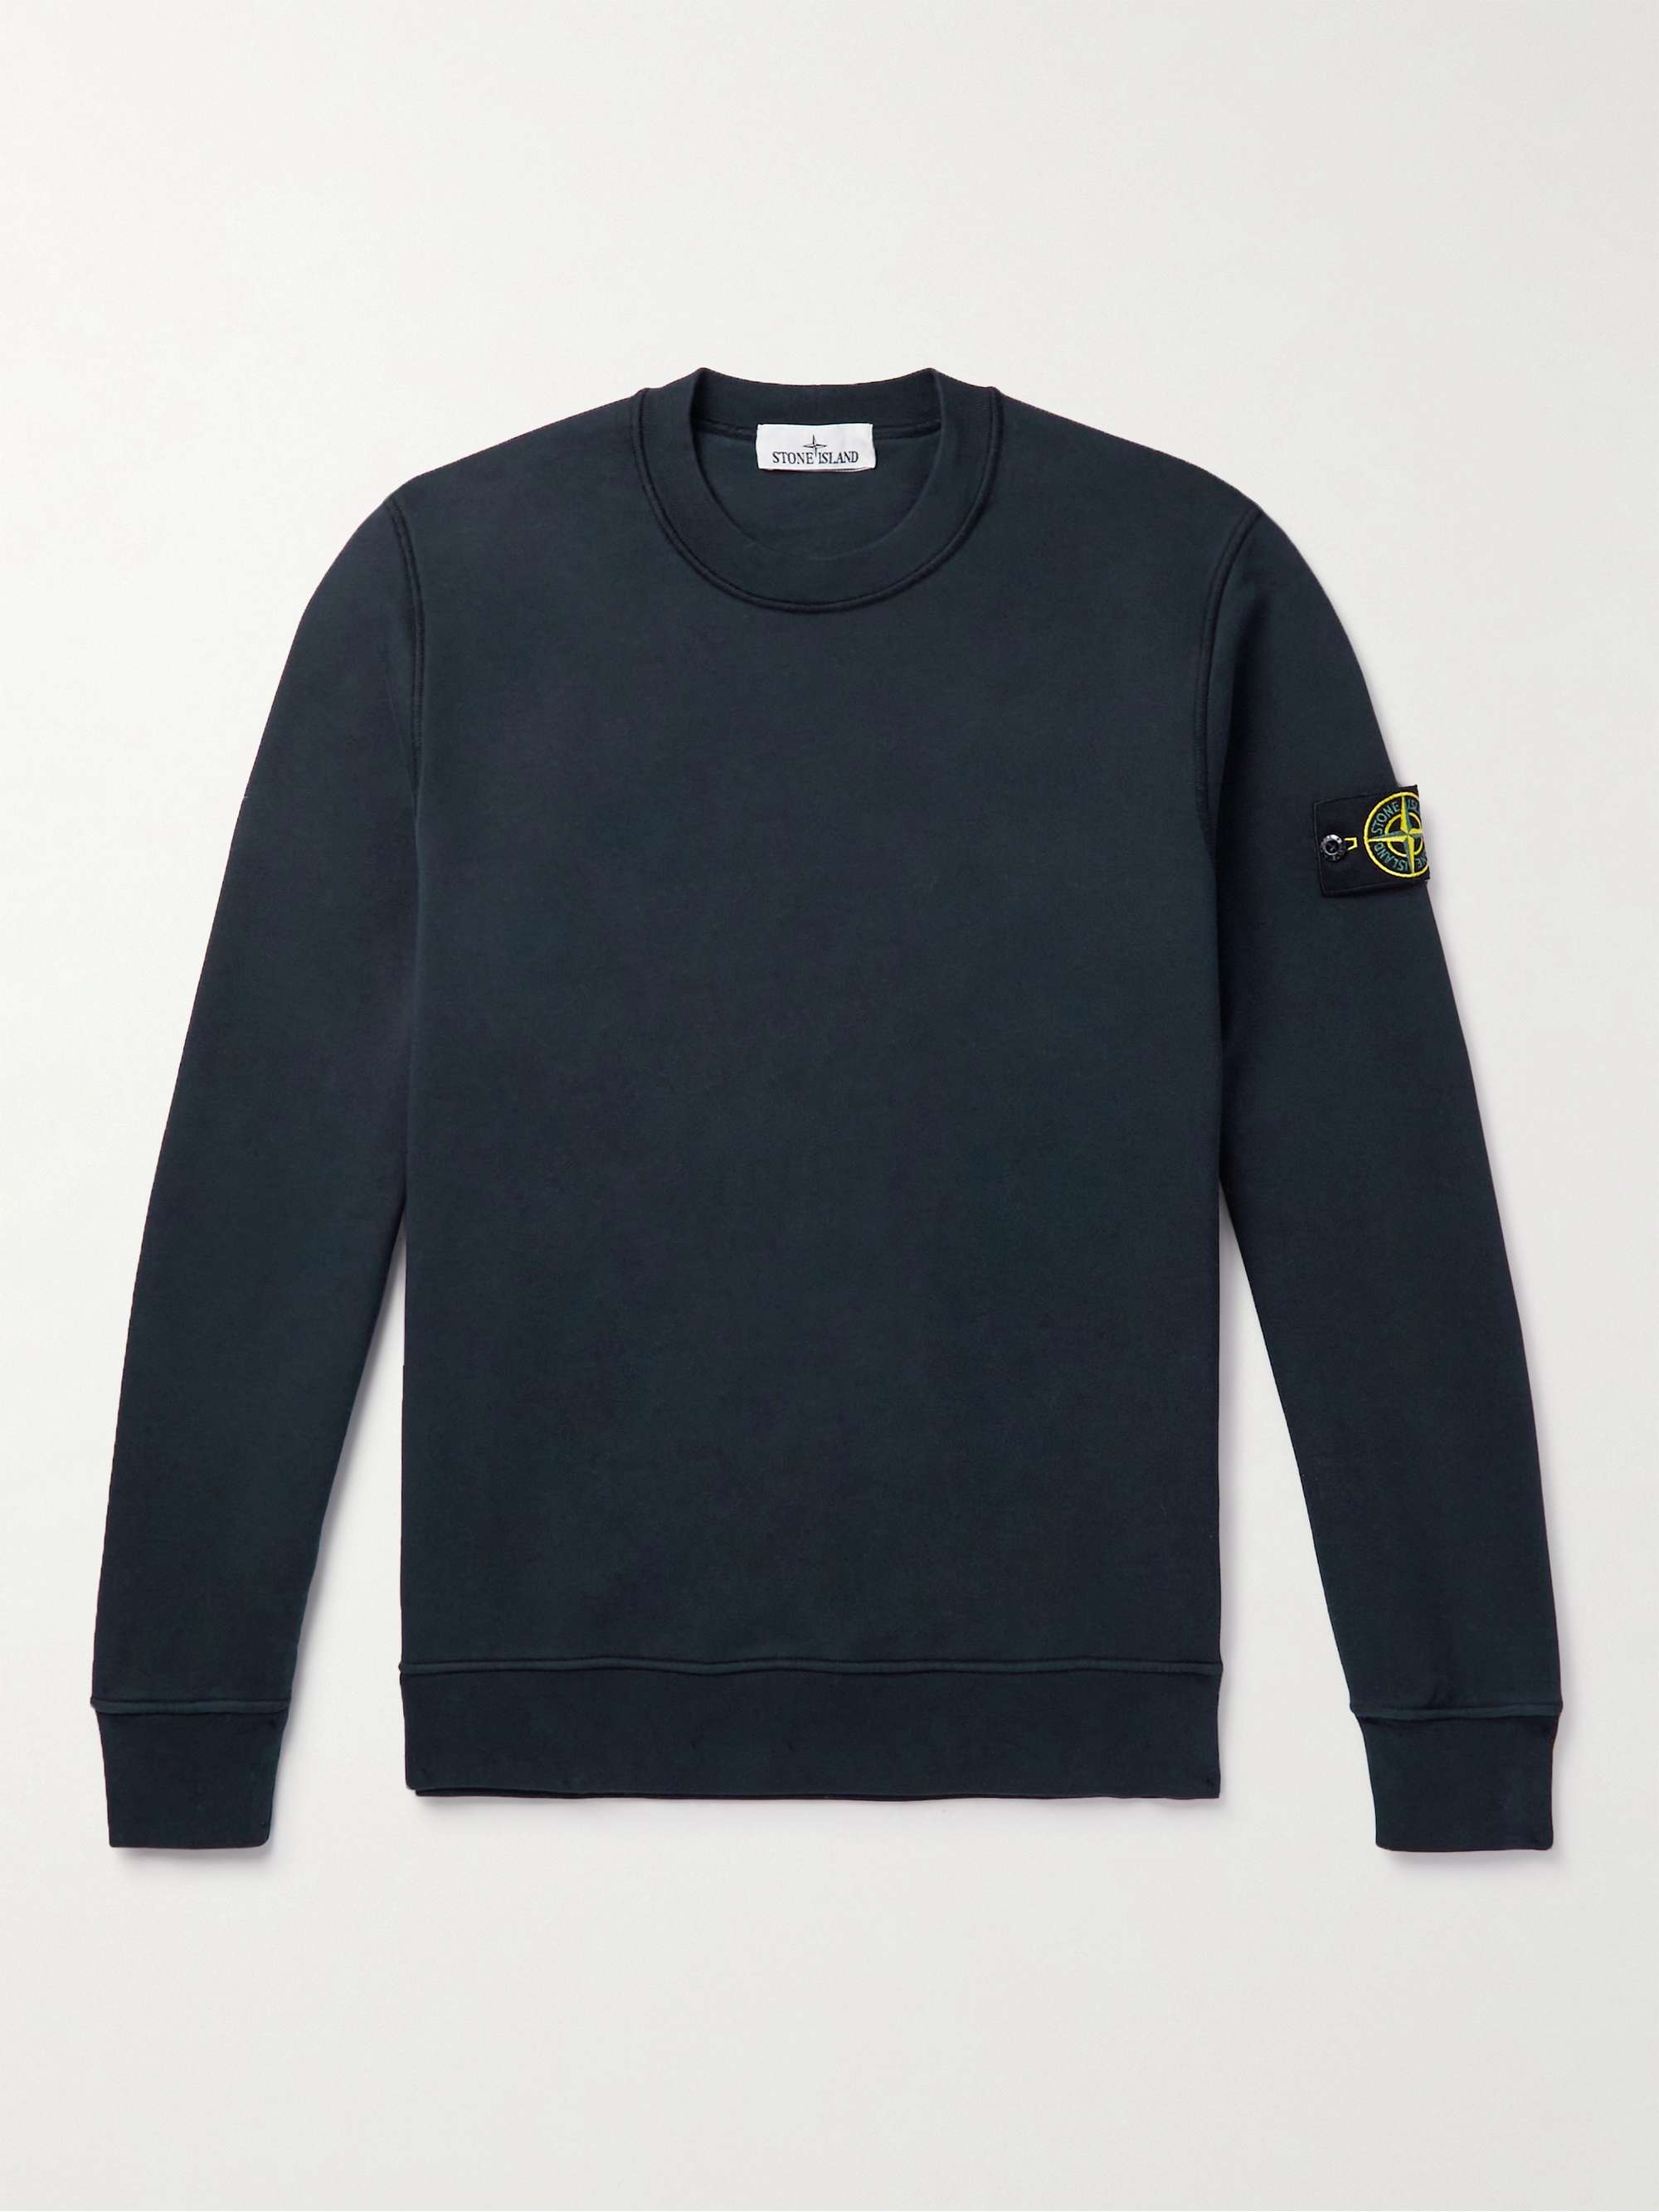 STONE ISLAND Logo-Appliqued Garment-Dyed Cotton-Jersey Sweatshirt,Navy